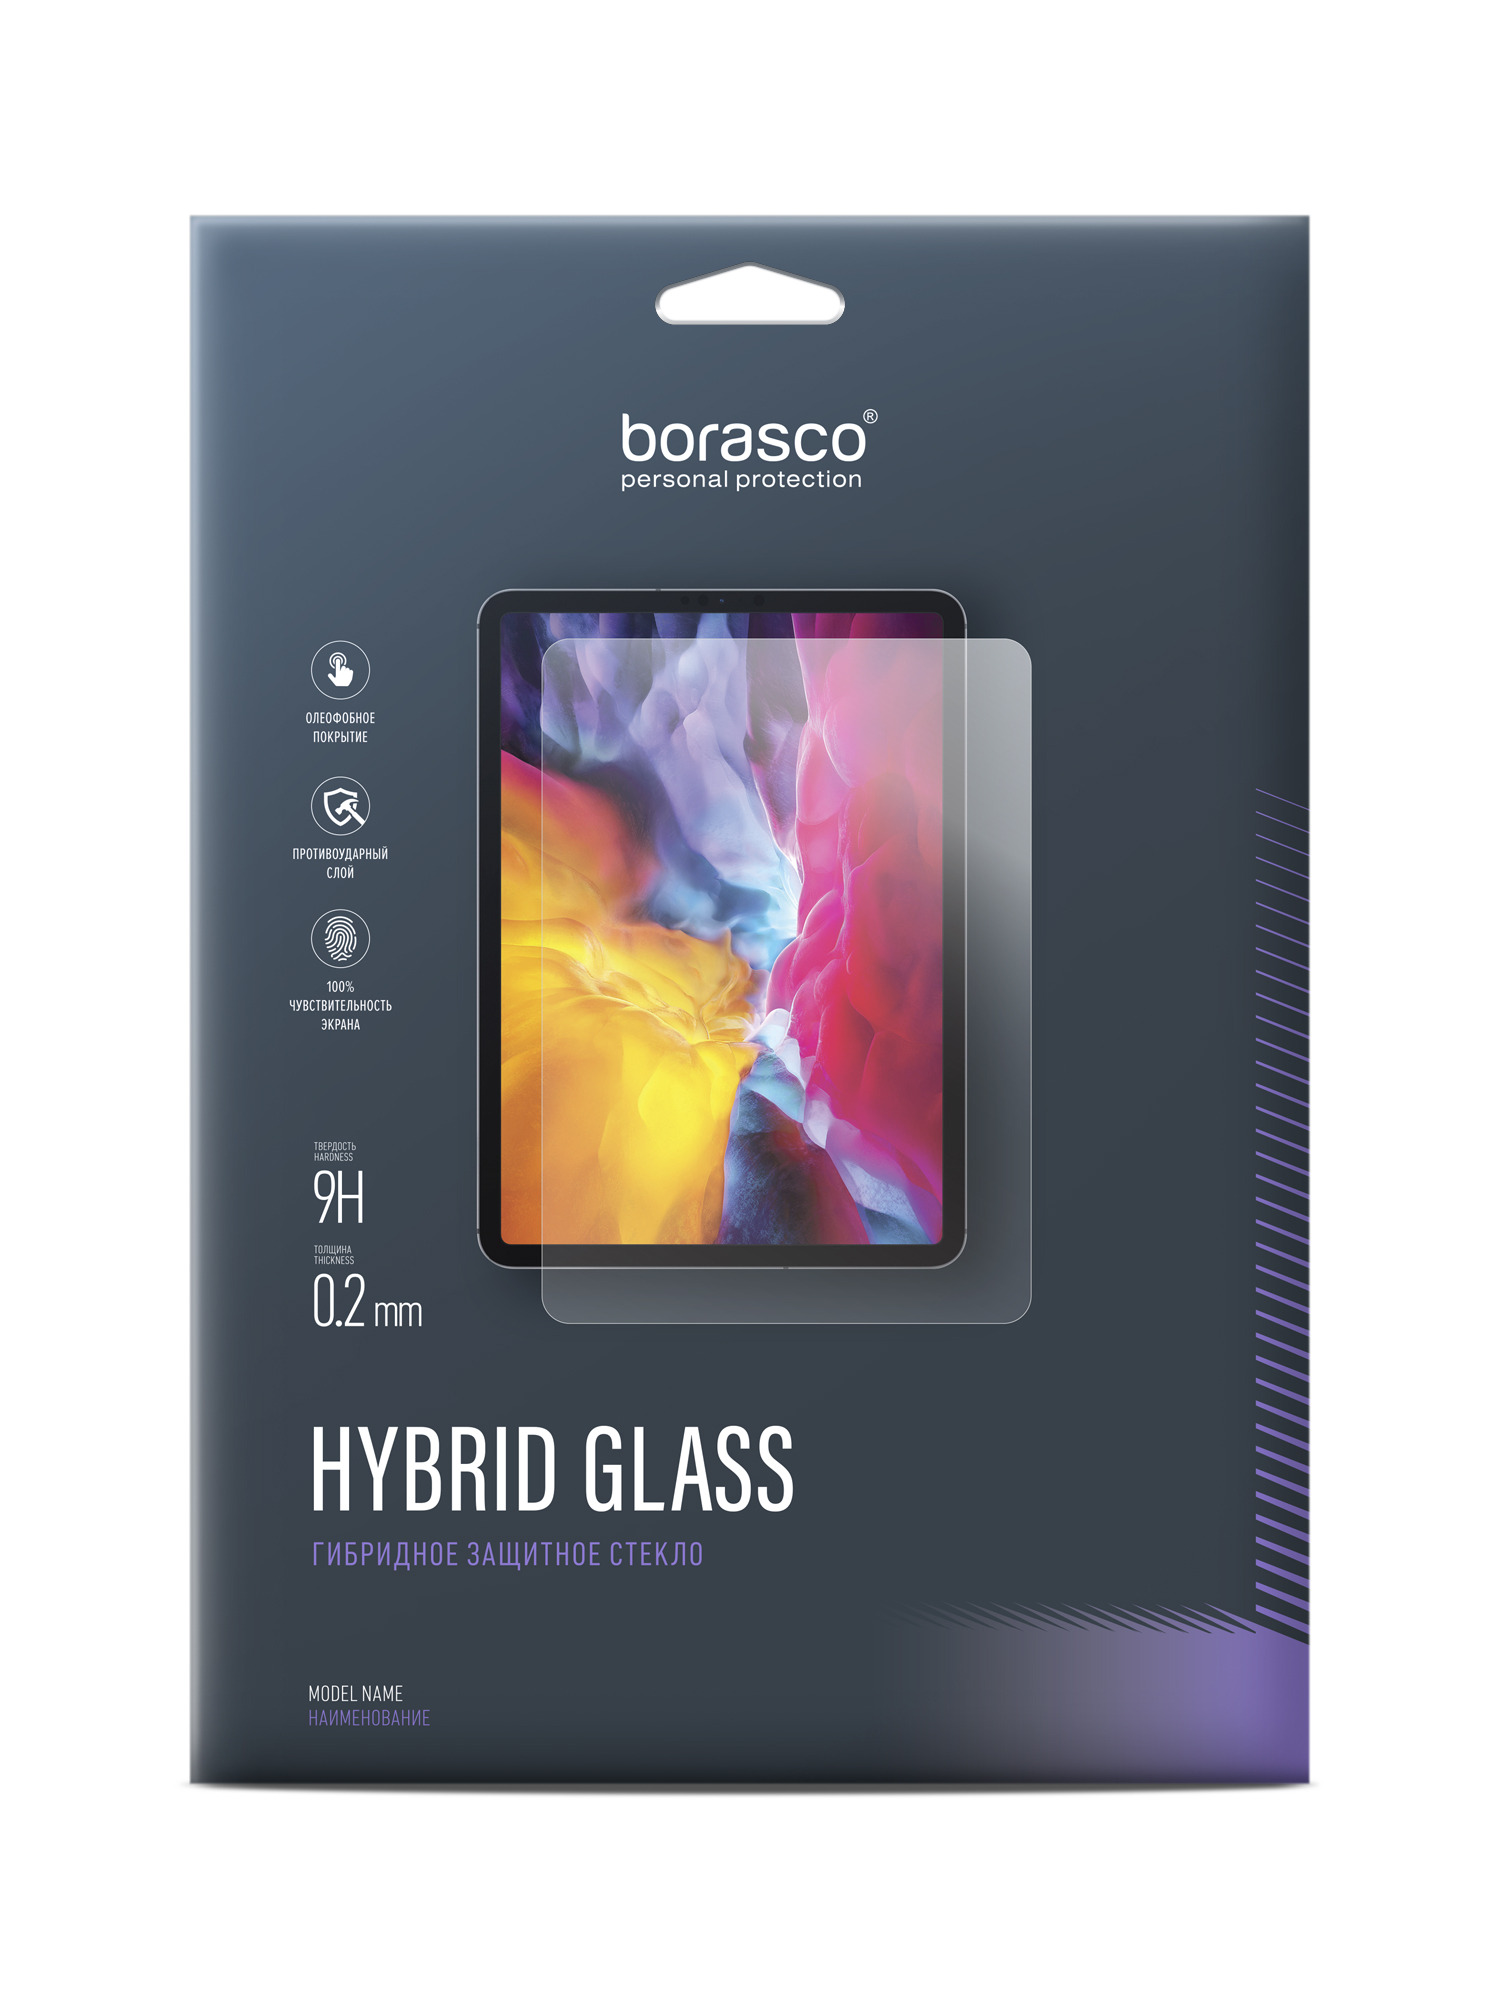 Защитное стекло Hybrid Glass для Samsung Galaxy Tab S7+ (SM-T970/ SM-T975) защитное стекло для samsung galaxy tab s7 sm t970 sm t975 hybrid glass borasco